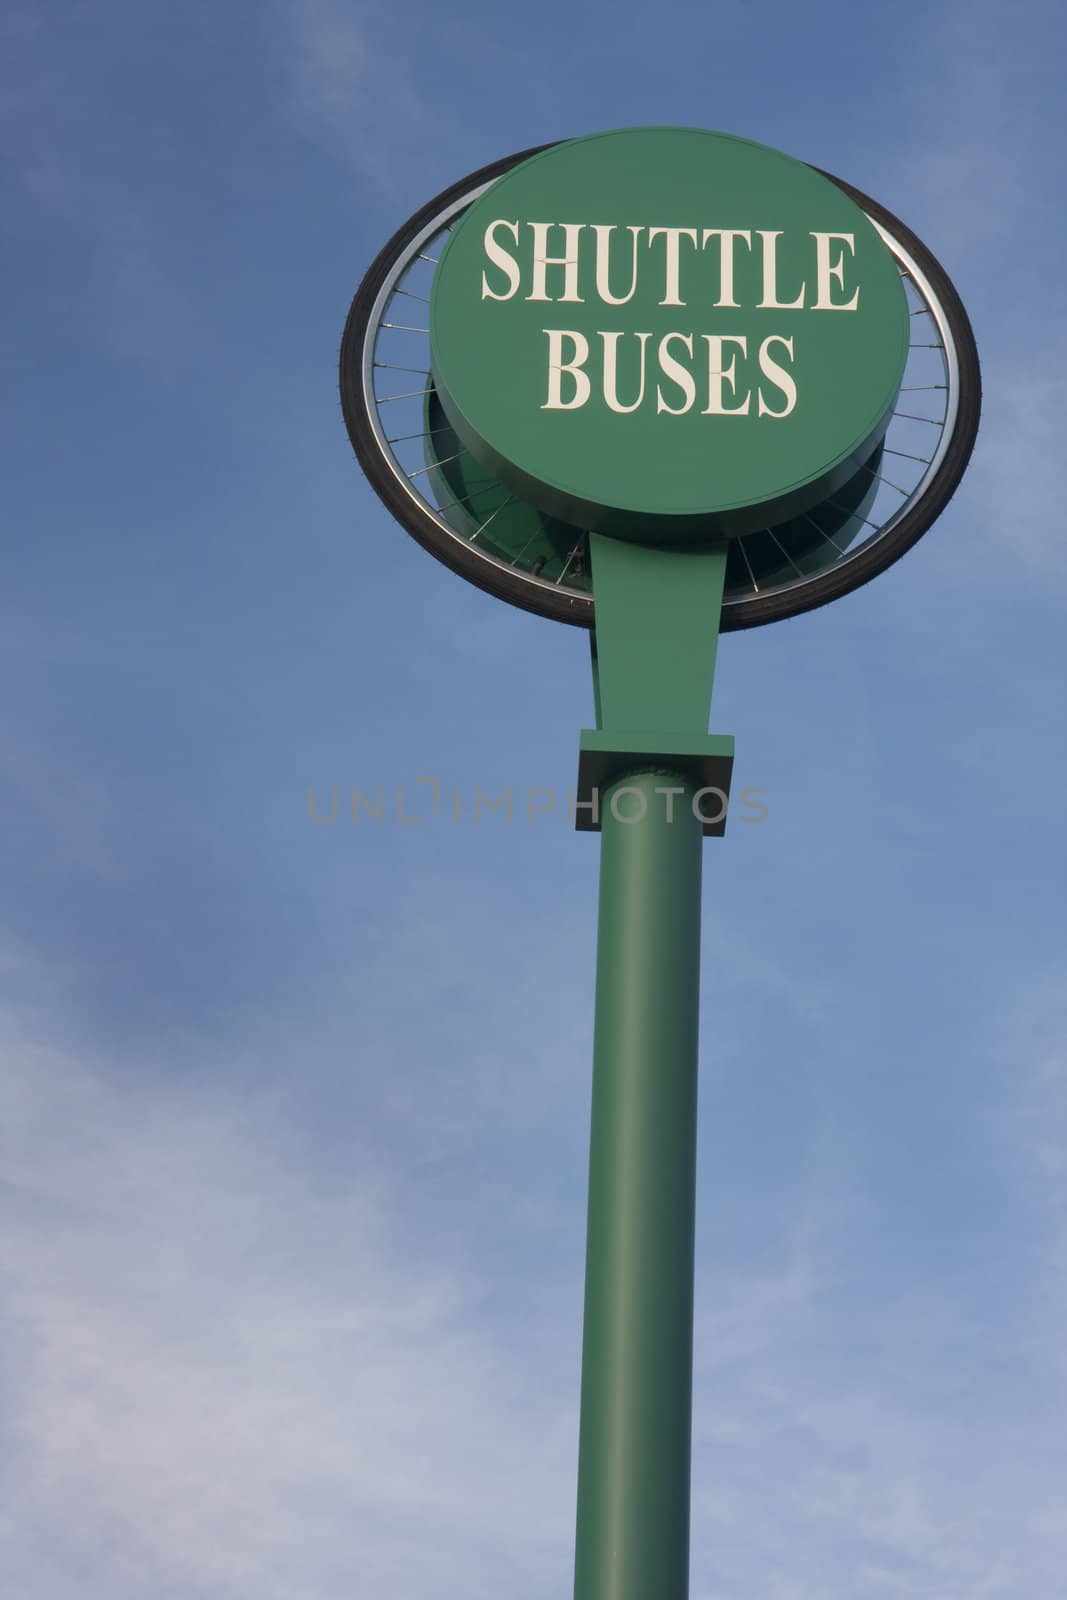 shuttle buses sign against blue sky by PixelsAway